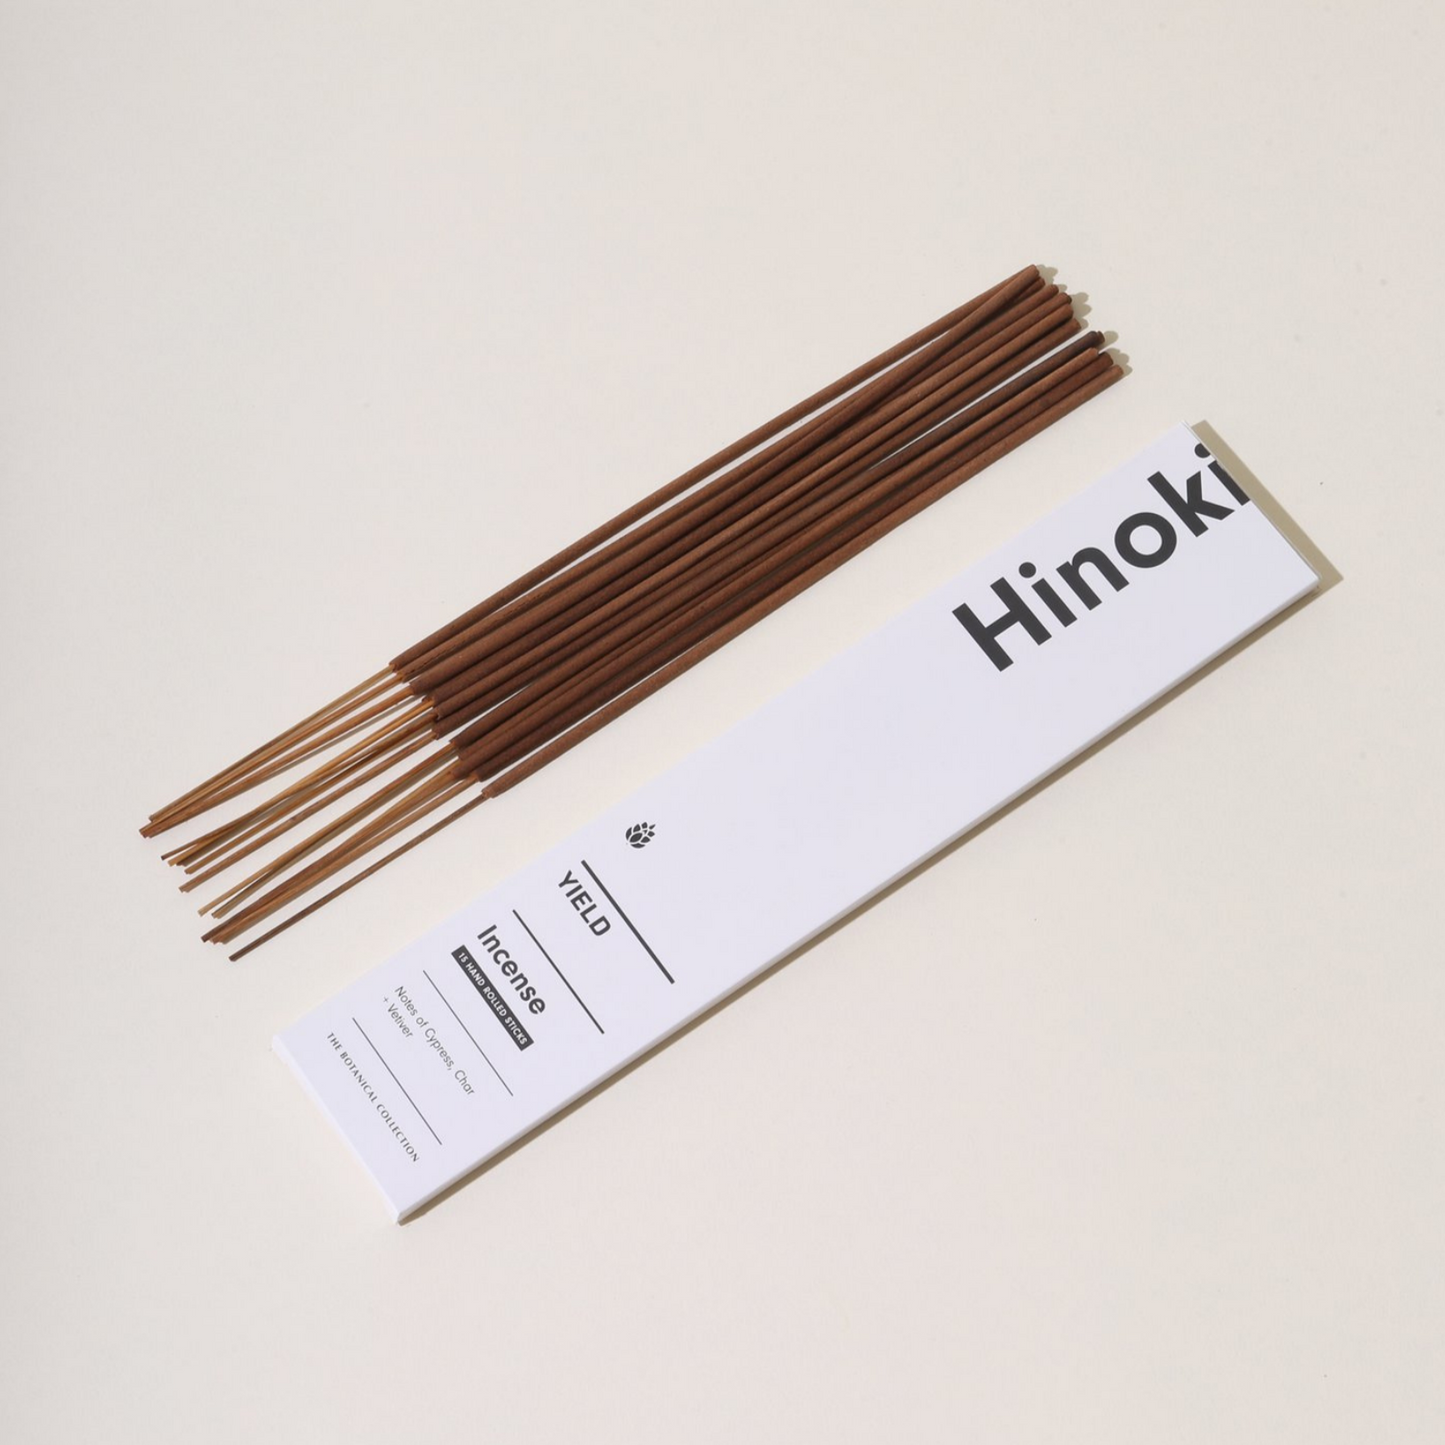 Hinoki Incense